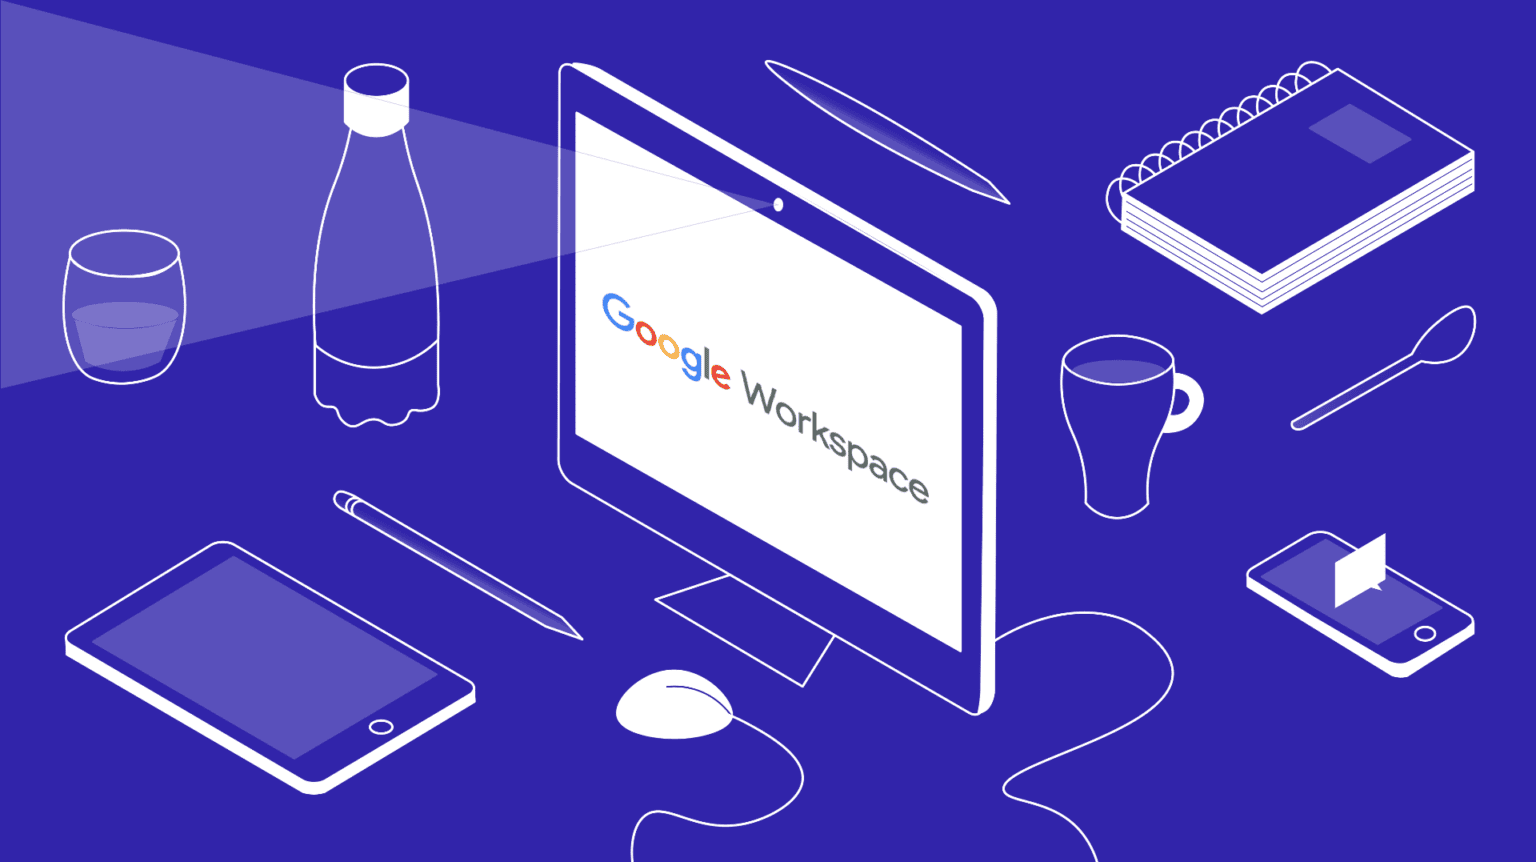 Google Workspace Business Gratis G Suite Gratis oferta promocional